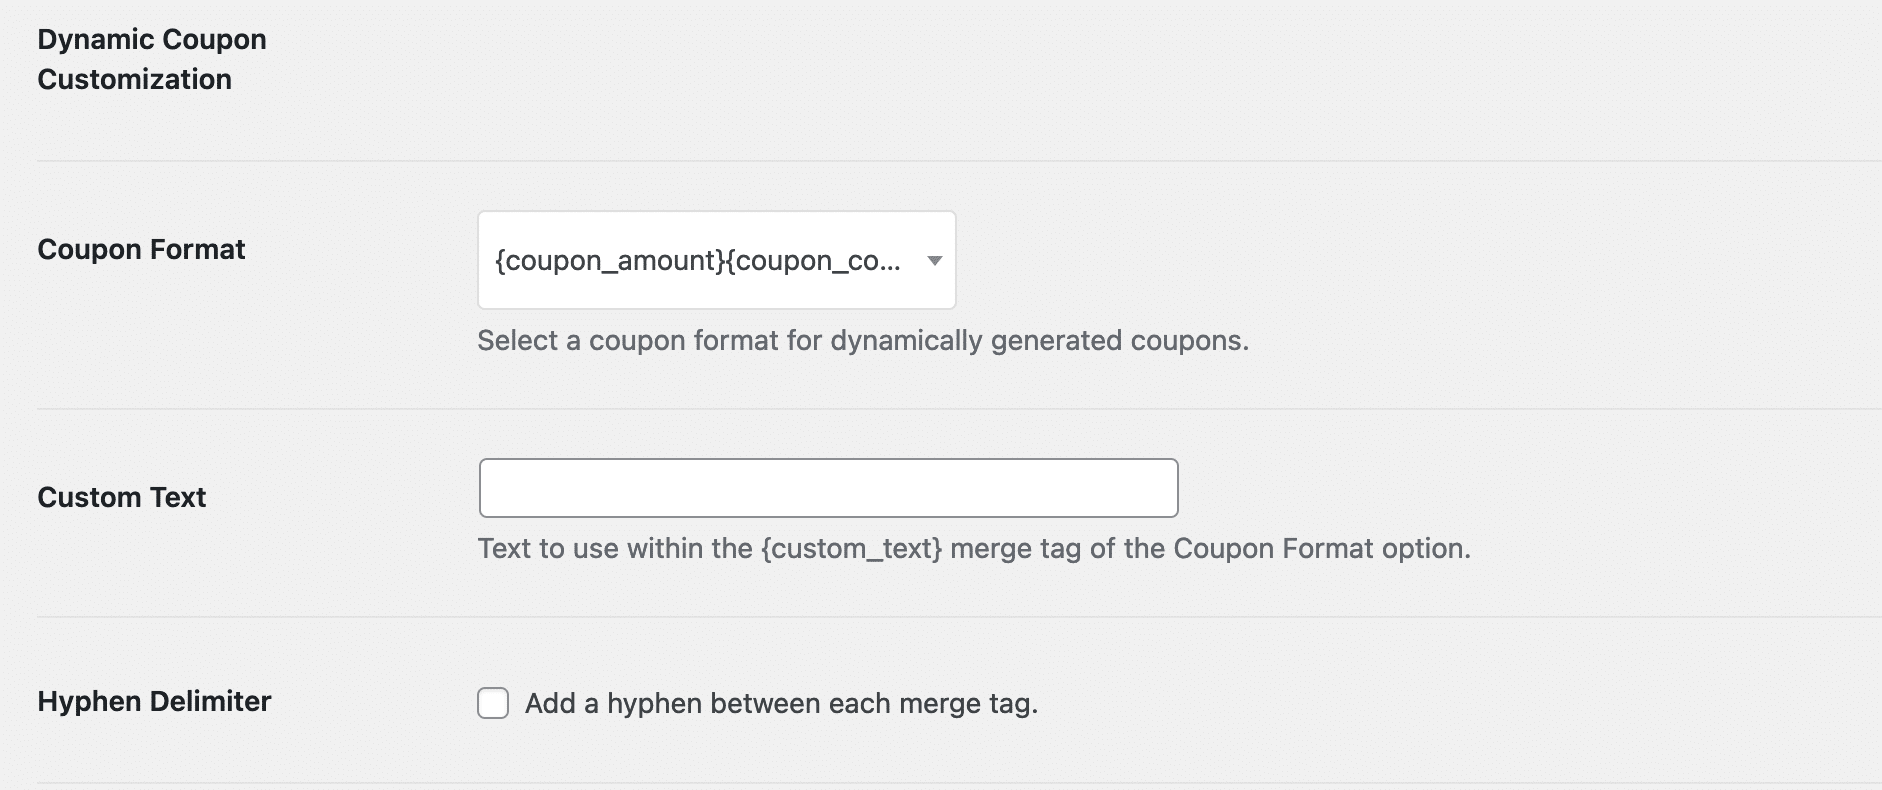 dynamic coupon customization